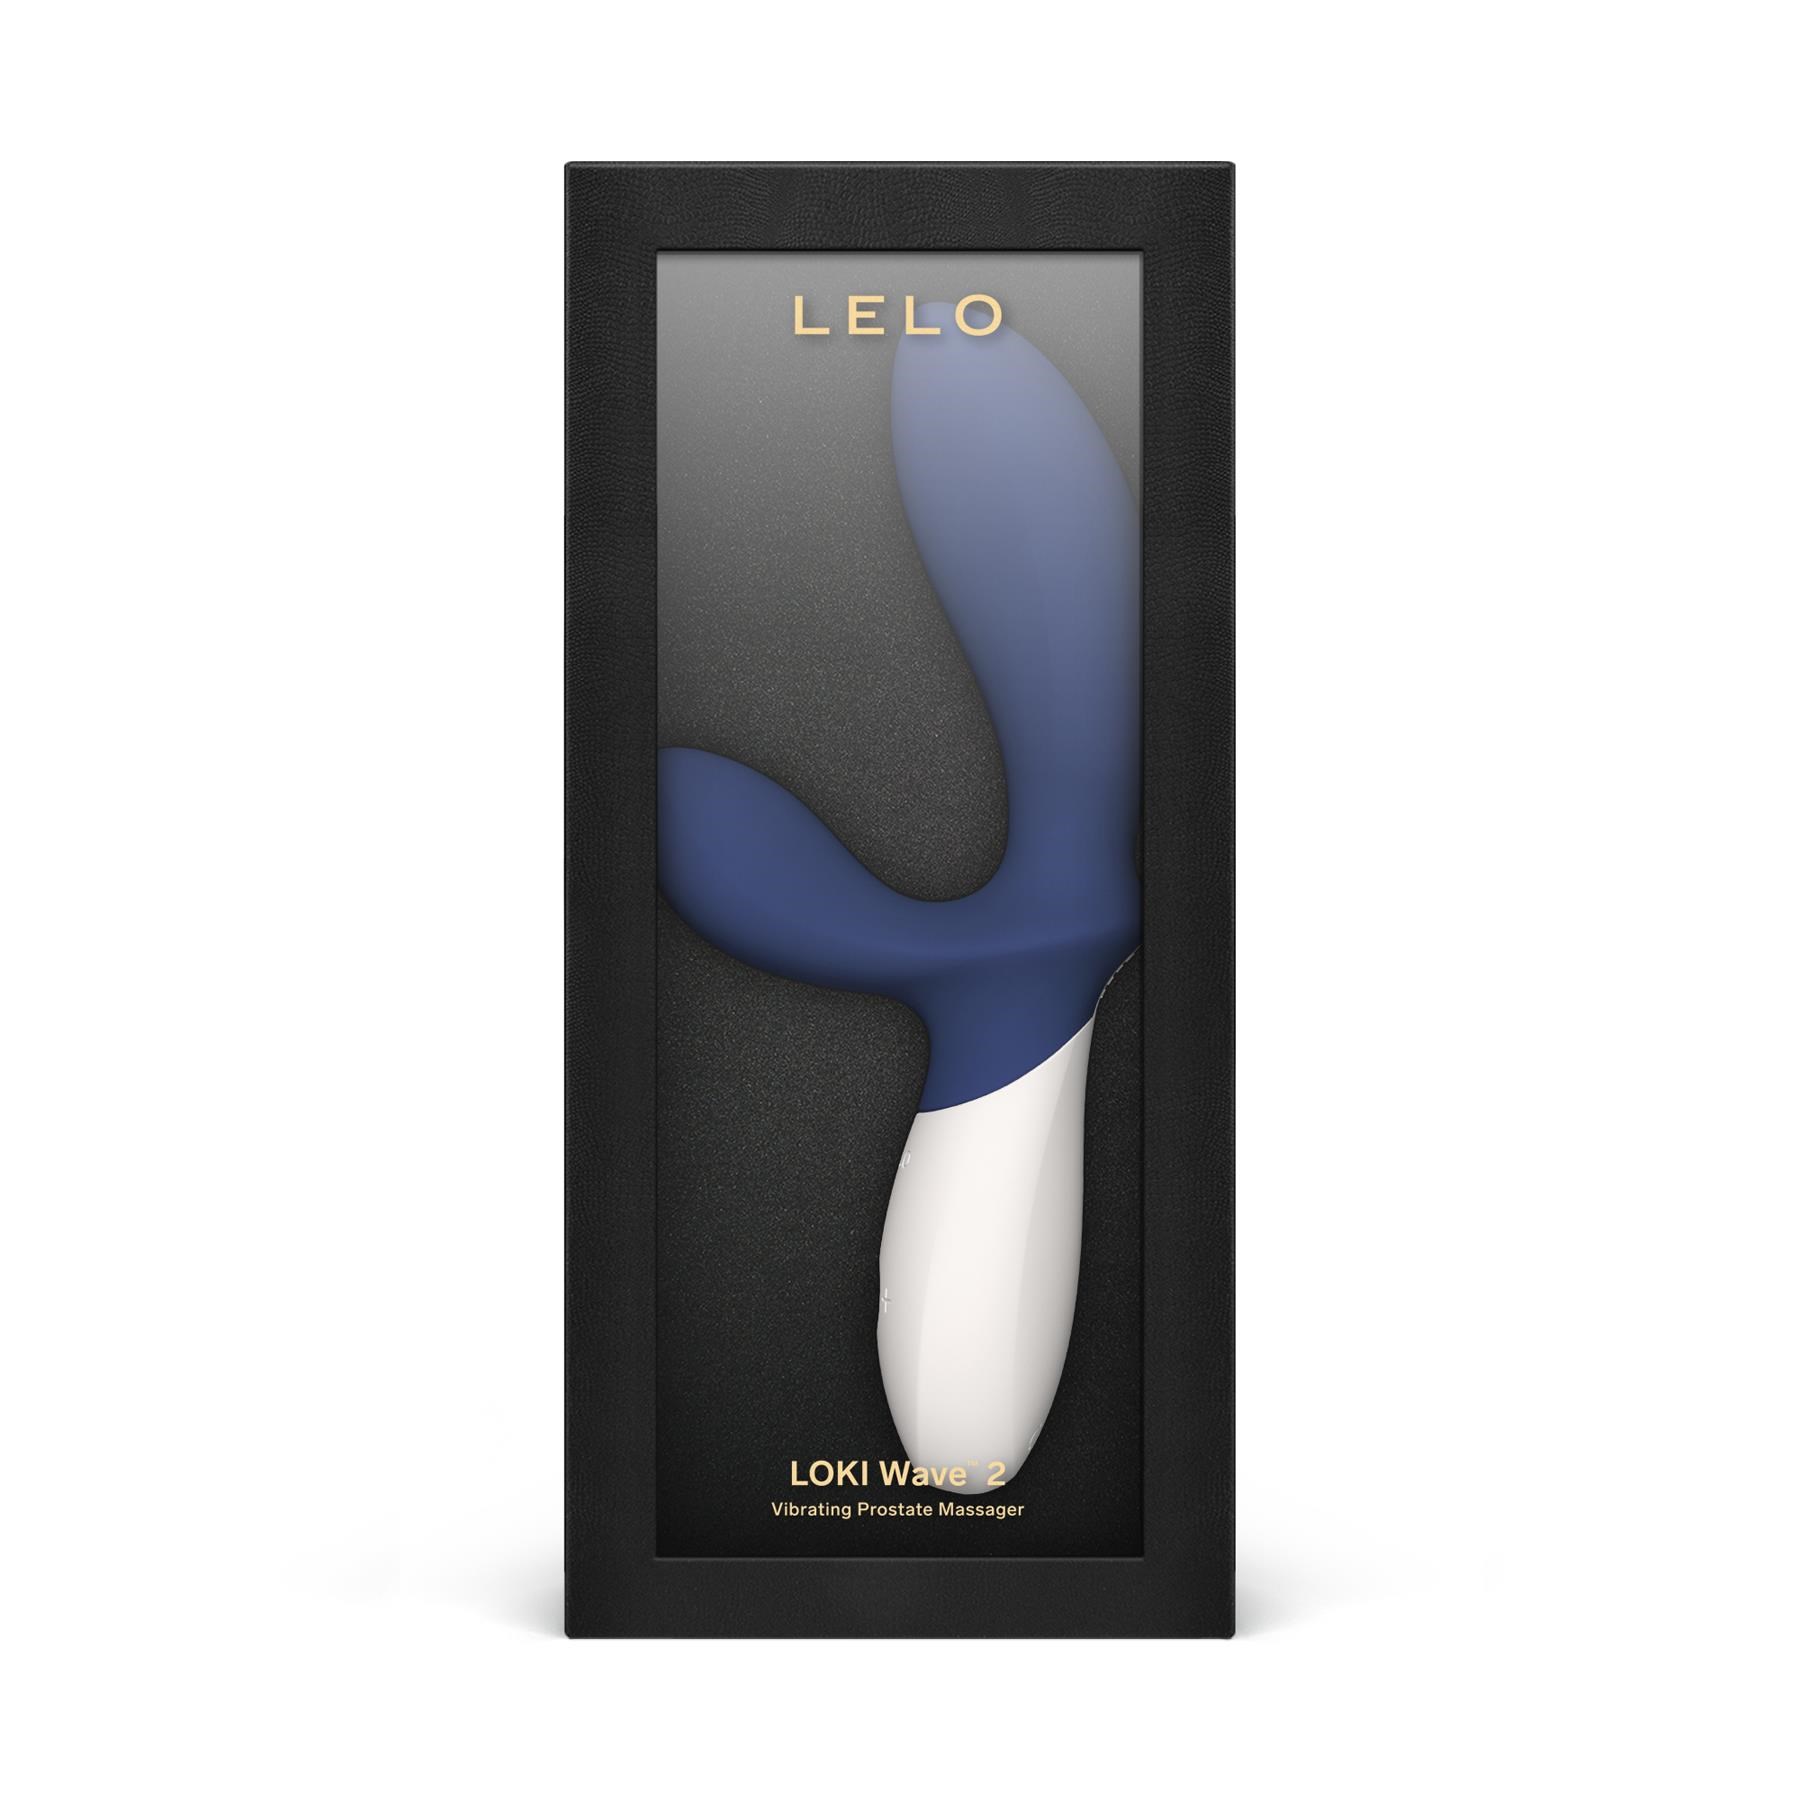 Lelo Loki Wave 2 Prostate Massager - Packaging